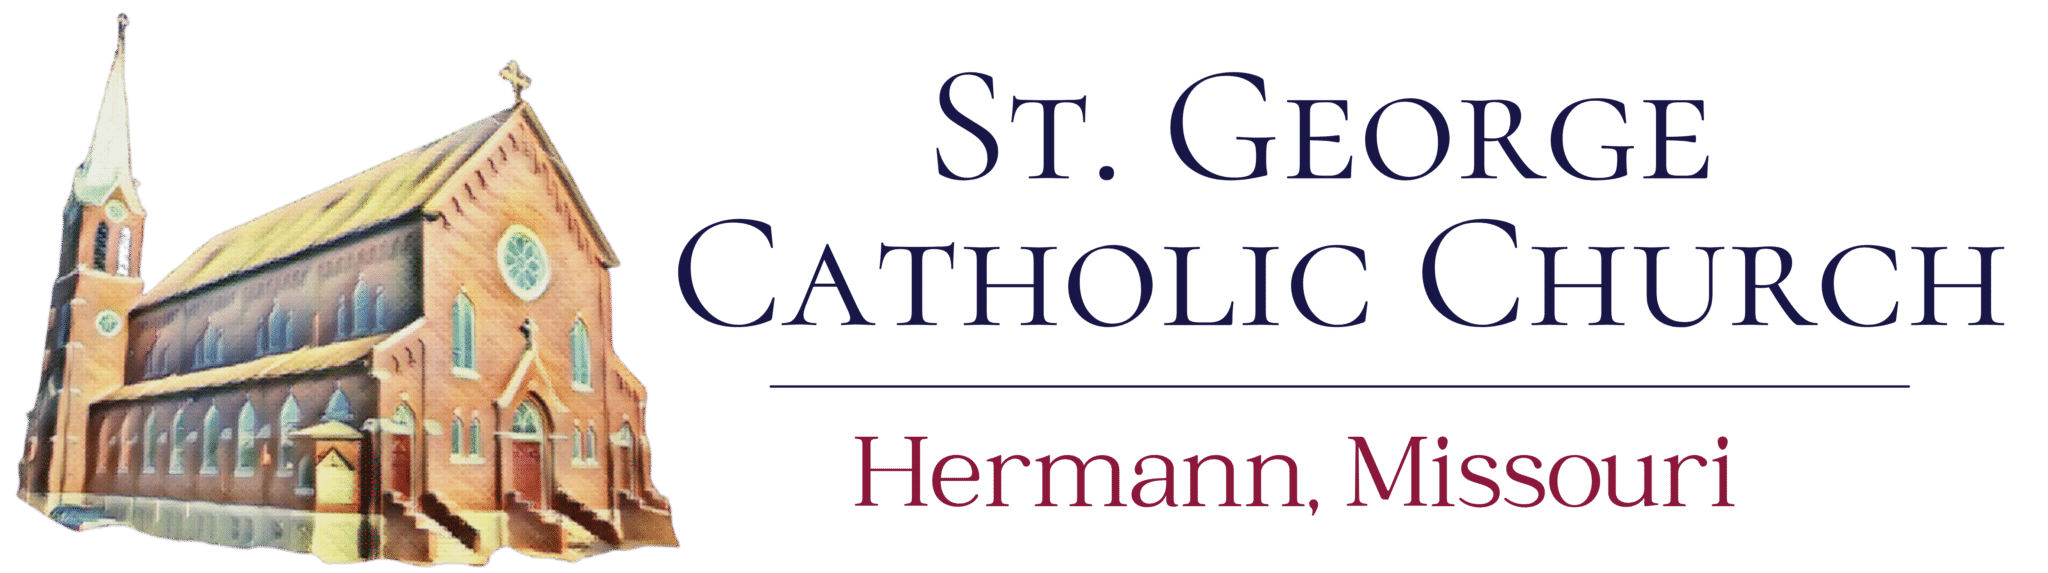 St George Logo